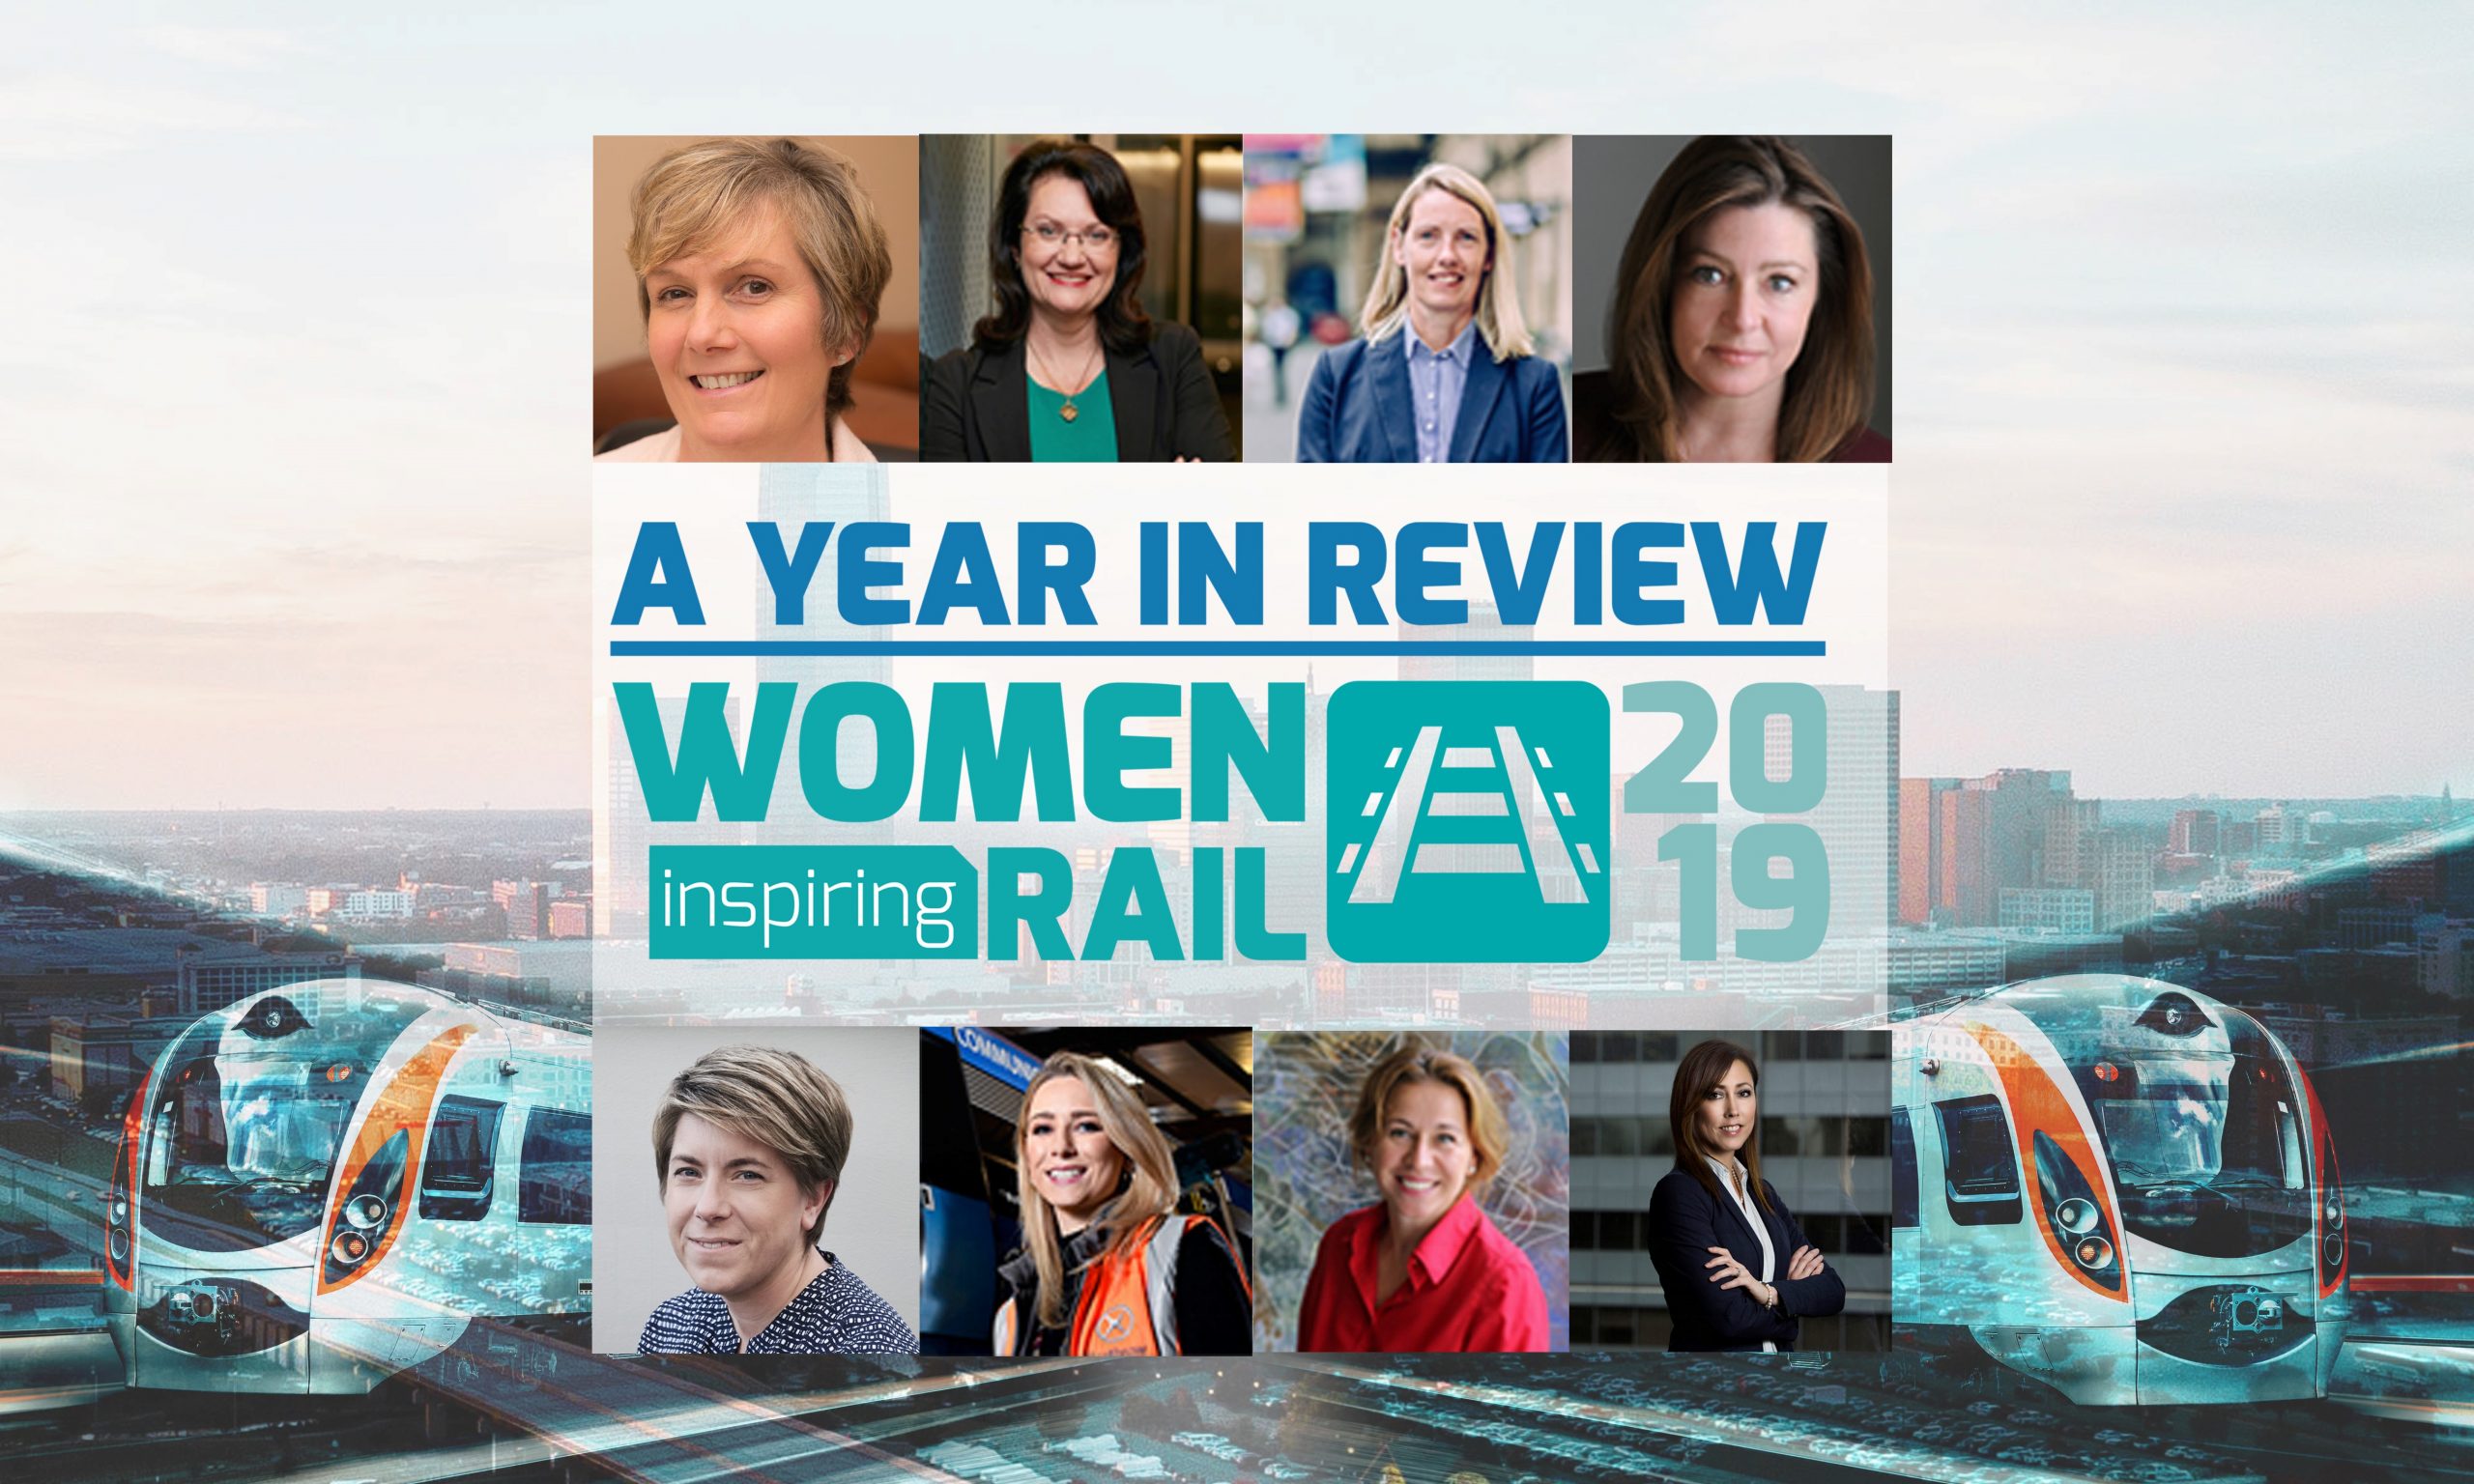 Women Inspiring Rail: A Year in Review